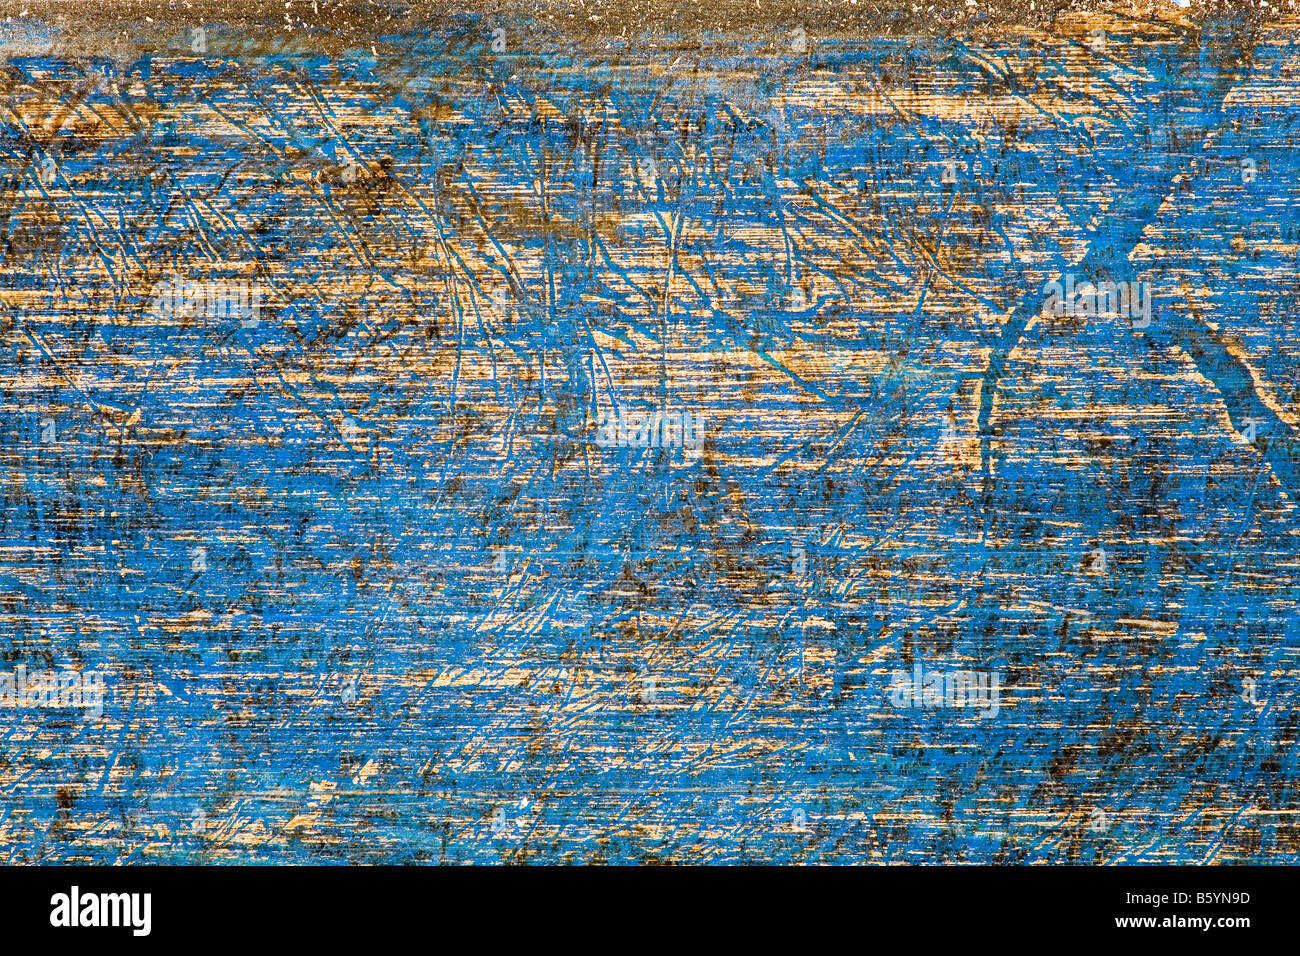 Wood texture blue bluish main color Stock Photo